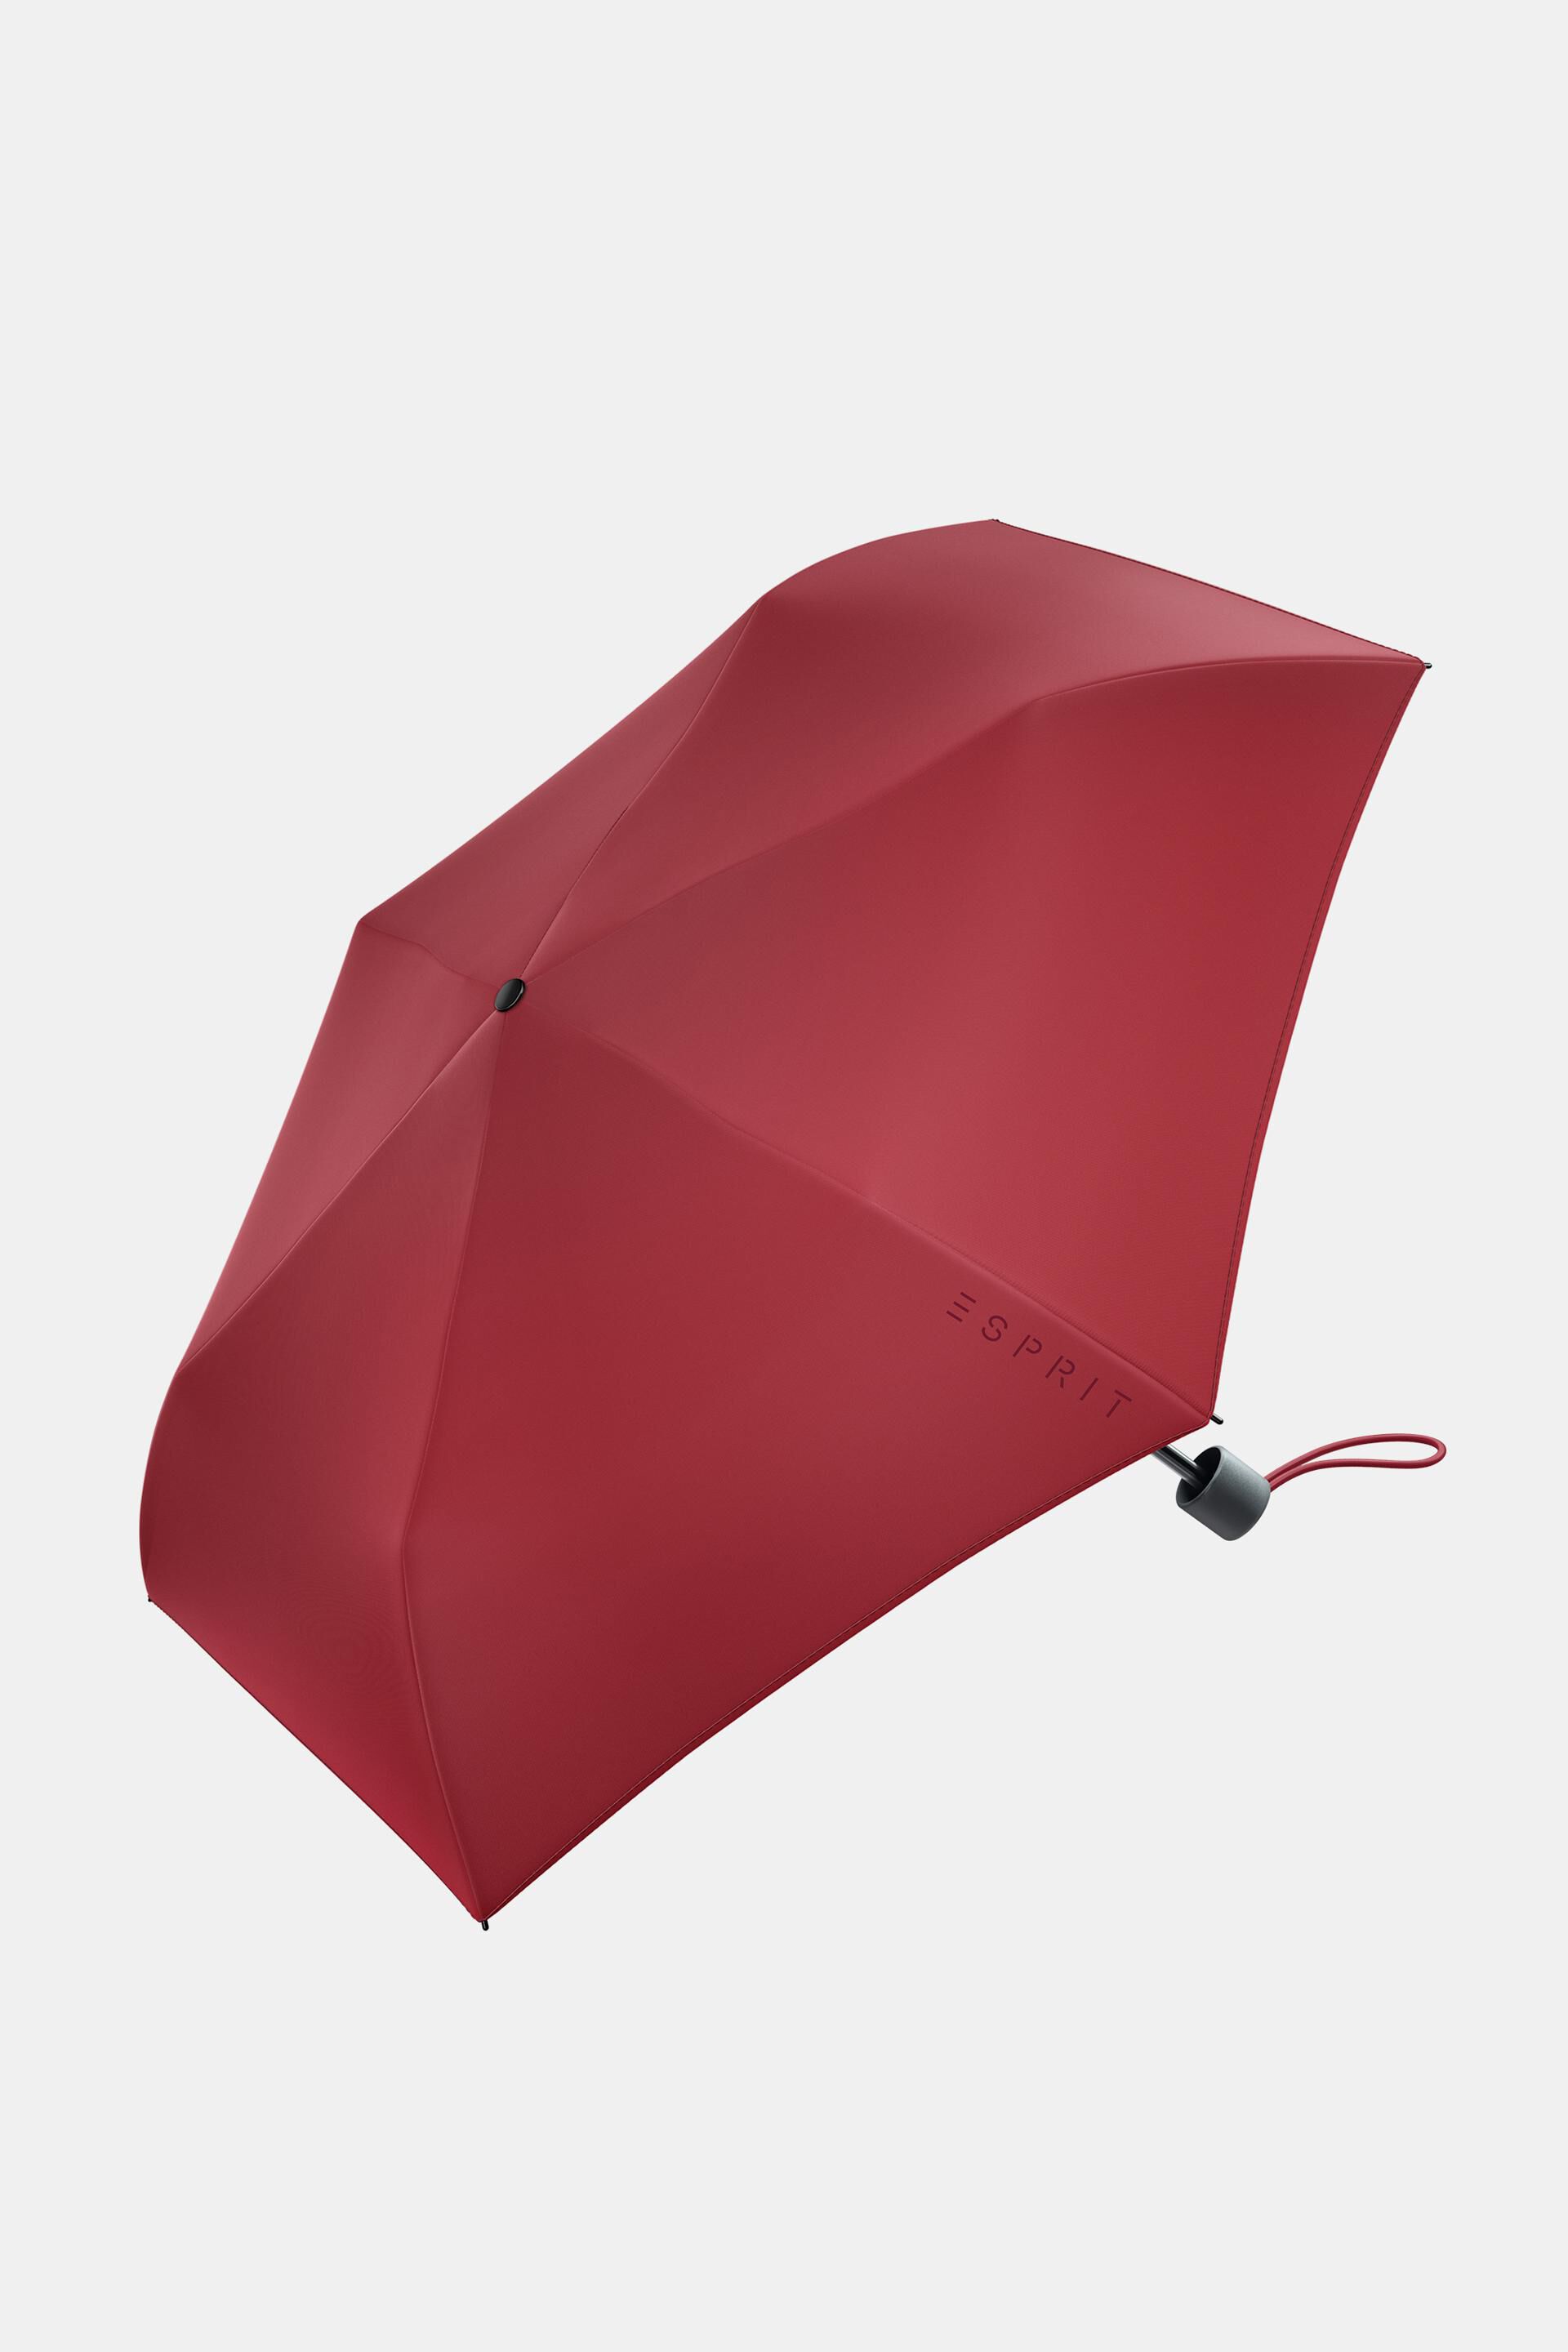 Esprit print umbrella red in logo with Pocket